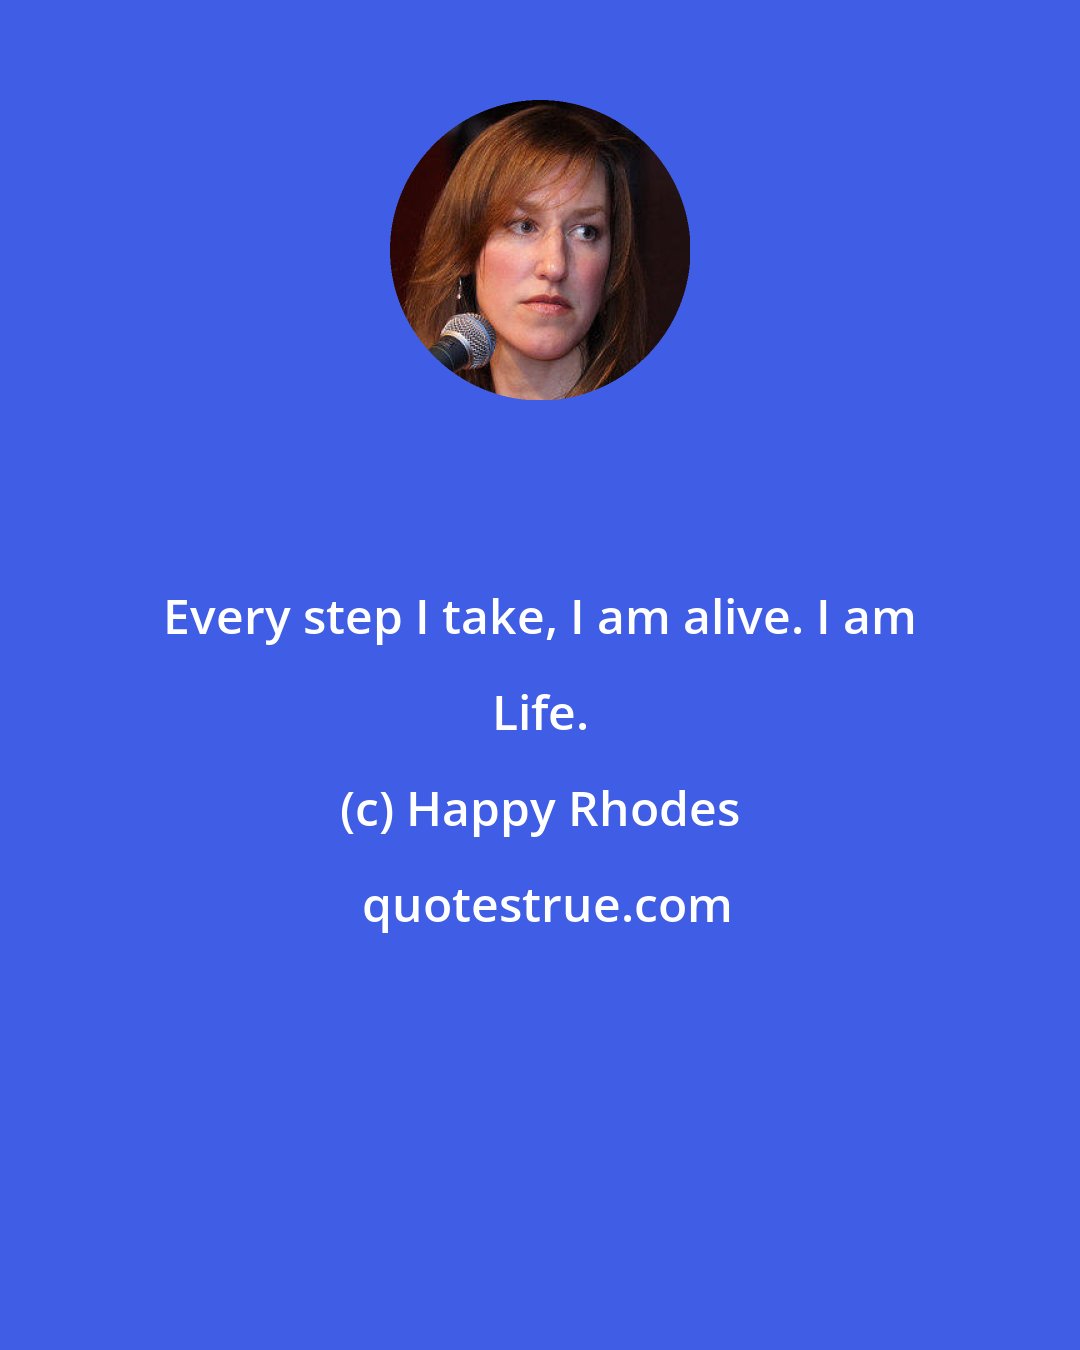 Happy Rhodes: Every step I take, I am alive. I am Life.